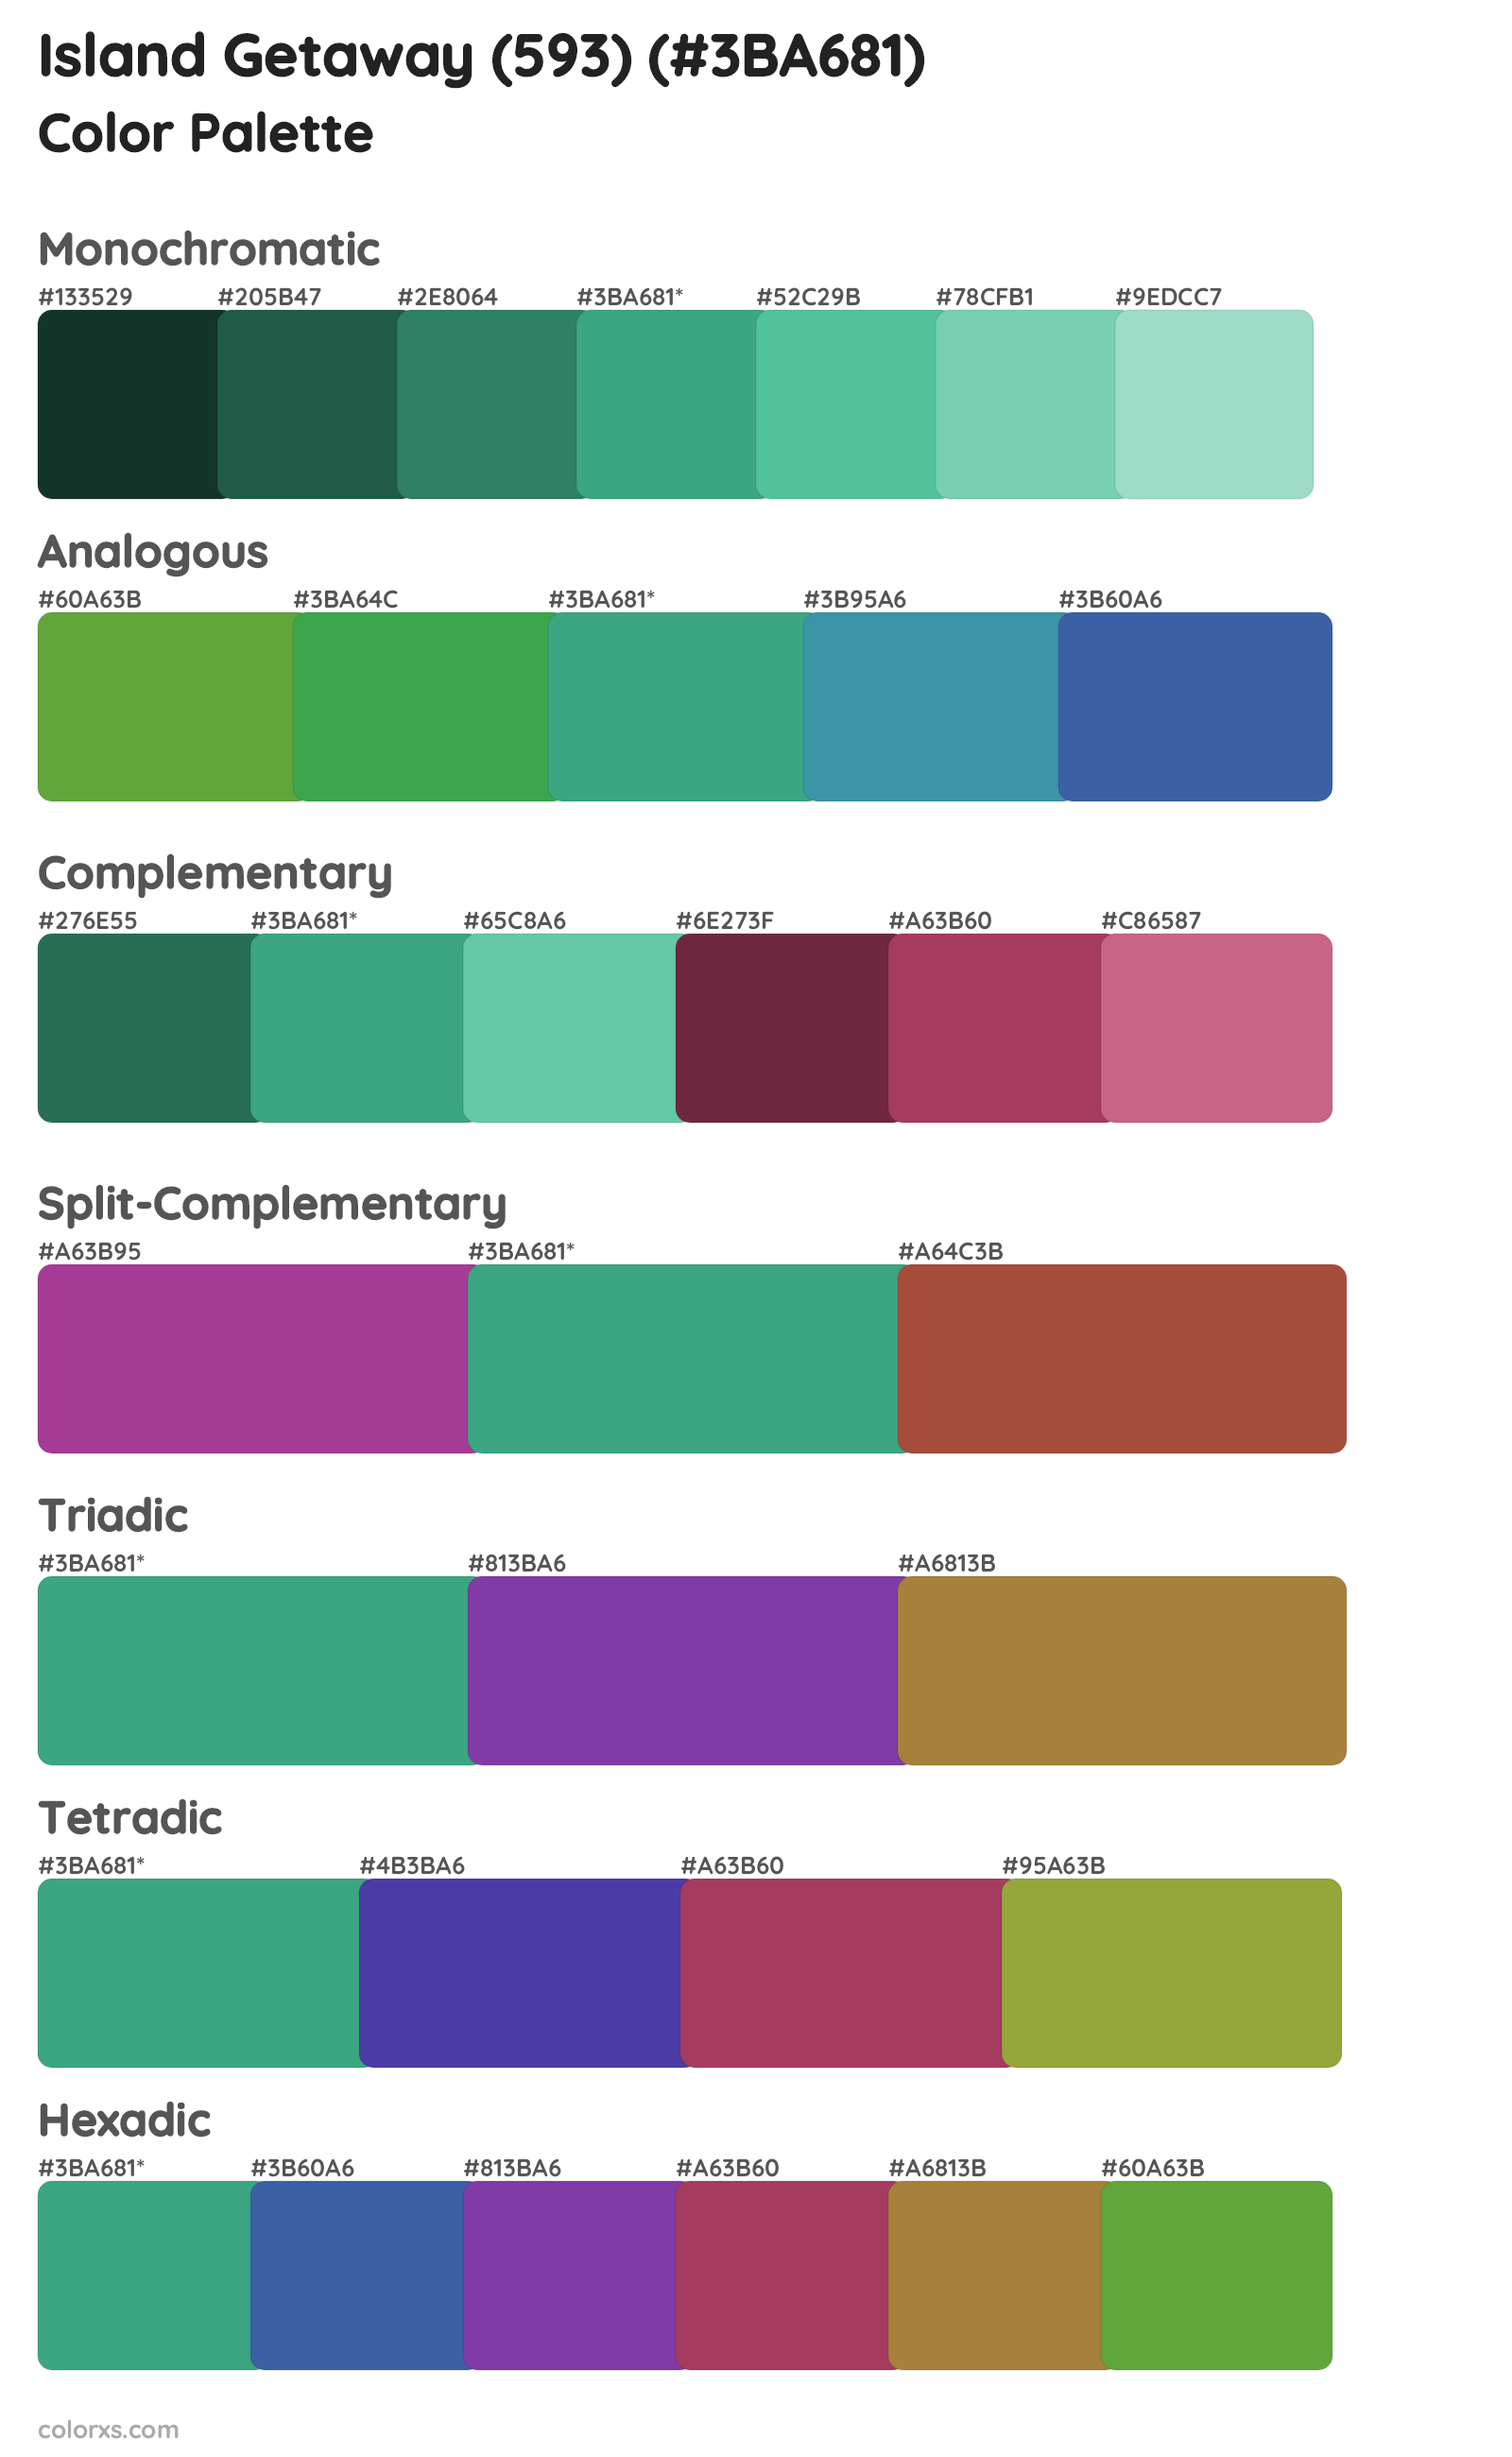 Island Getaway (593) Color Scheme Palettes